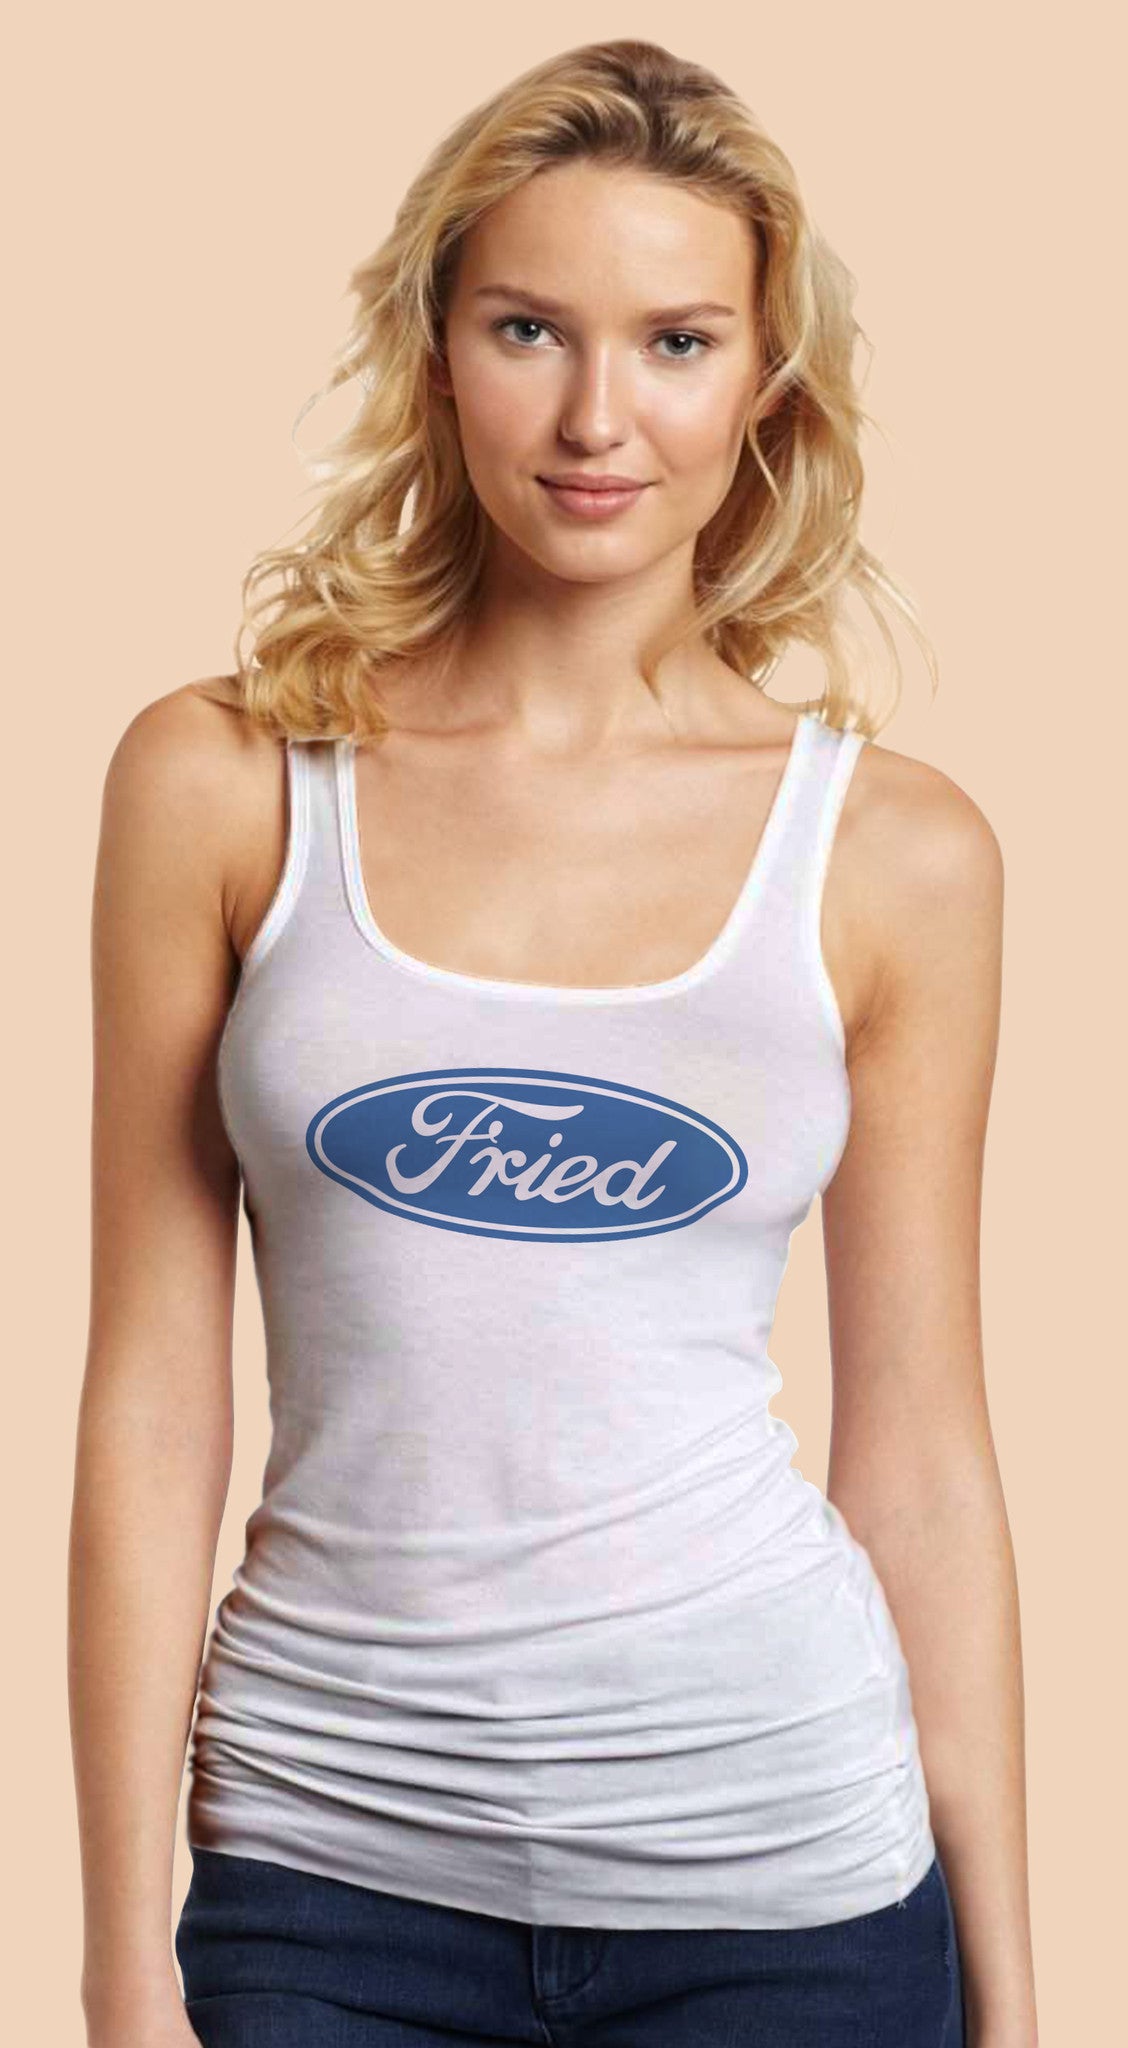 Fried White tanktop T-shirt for Women - TshirtNow.net - 1